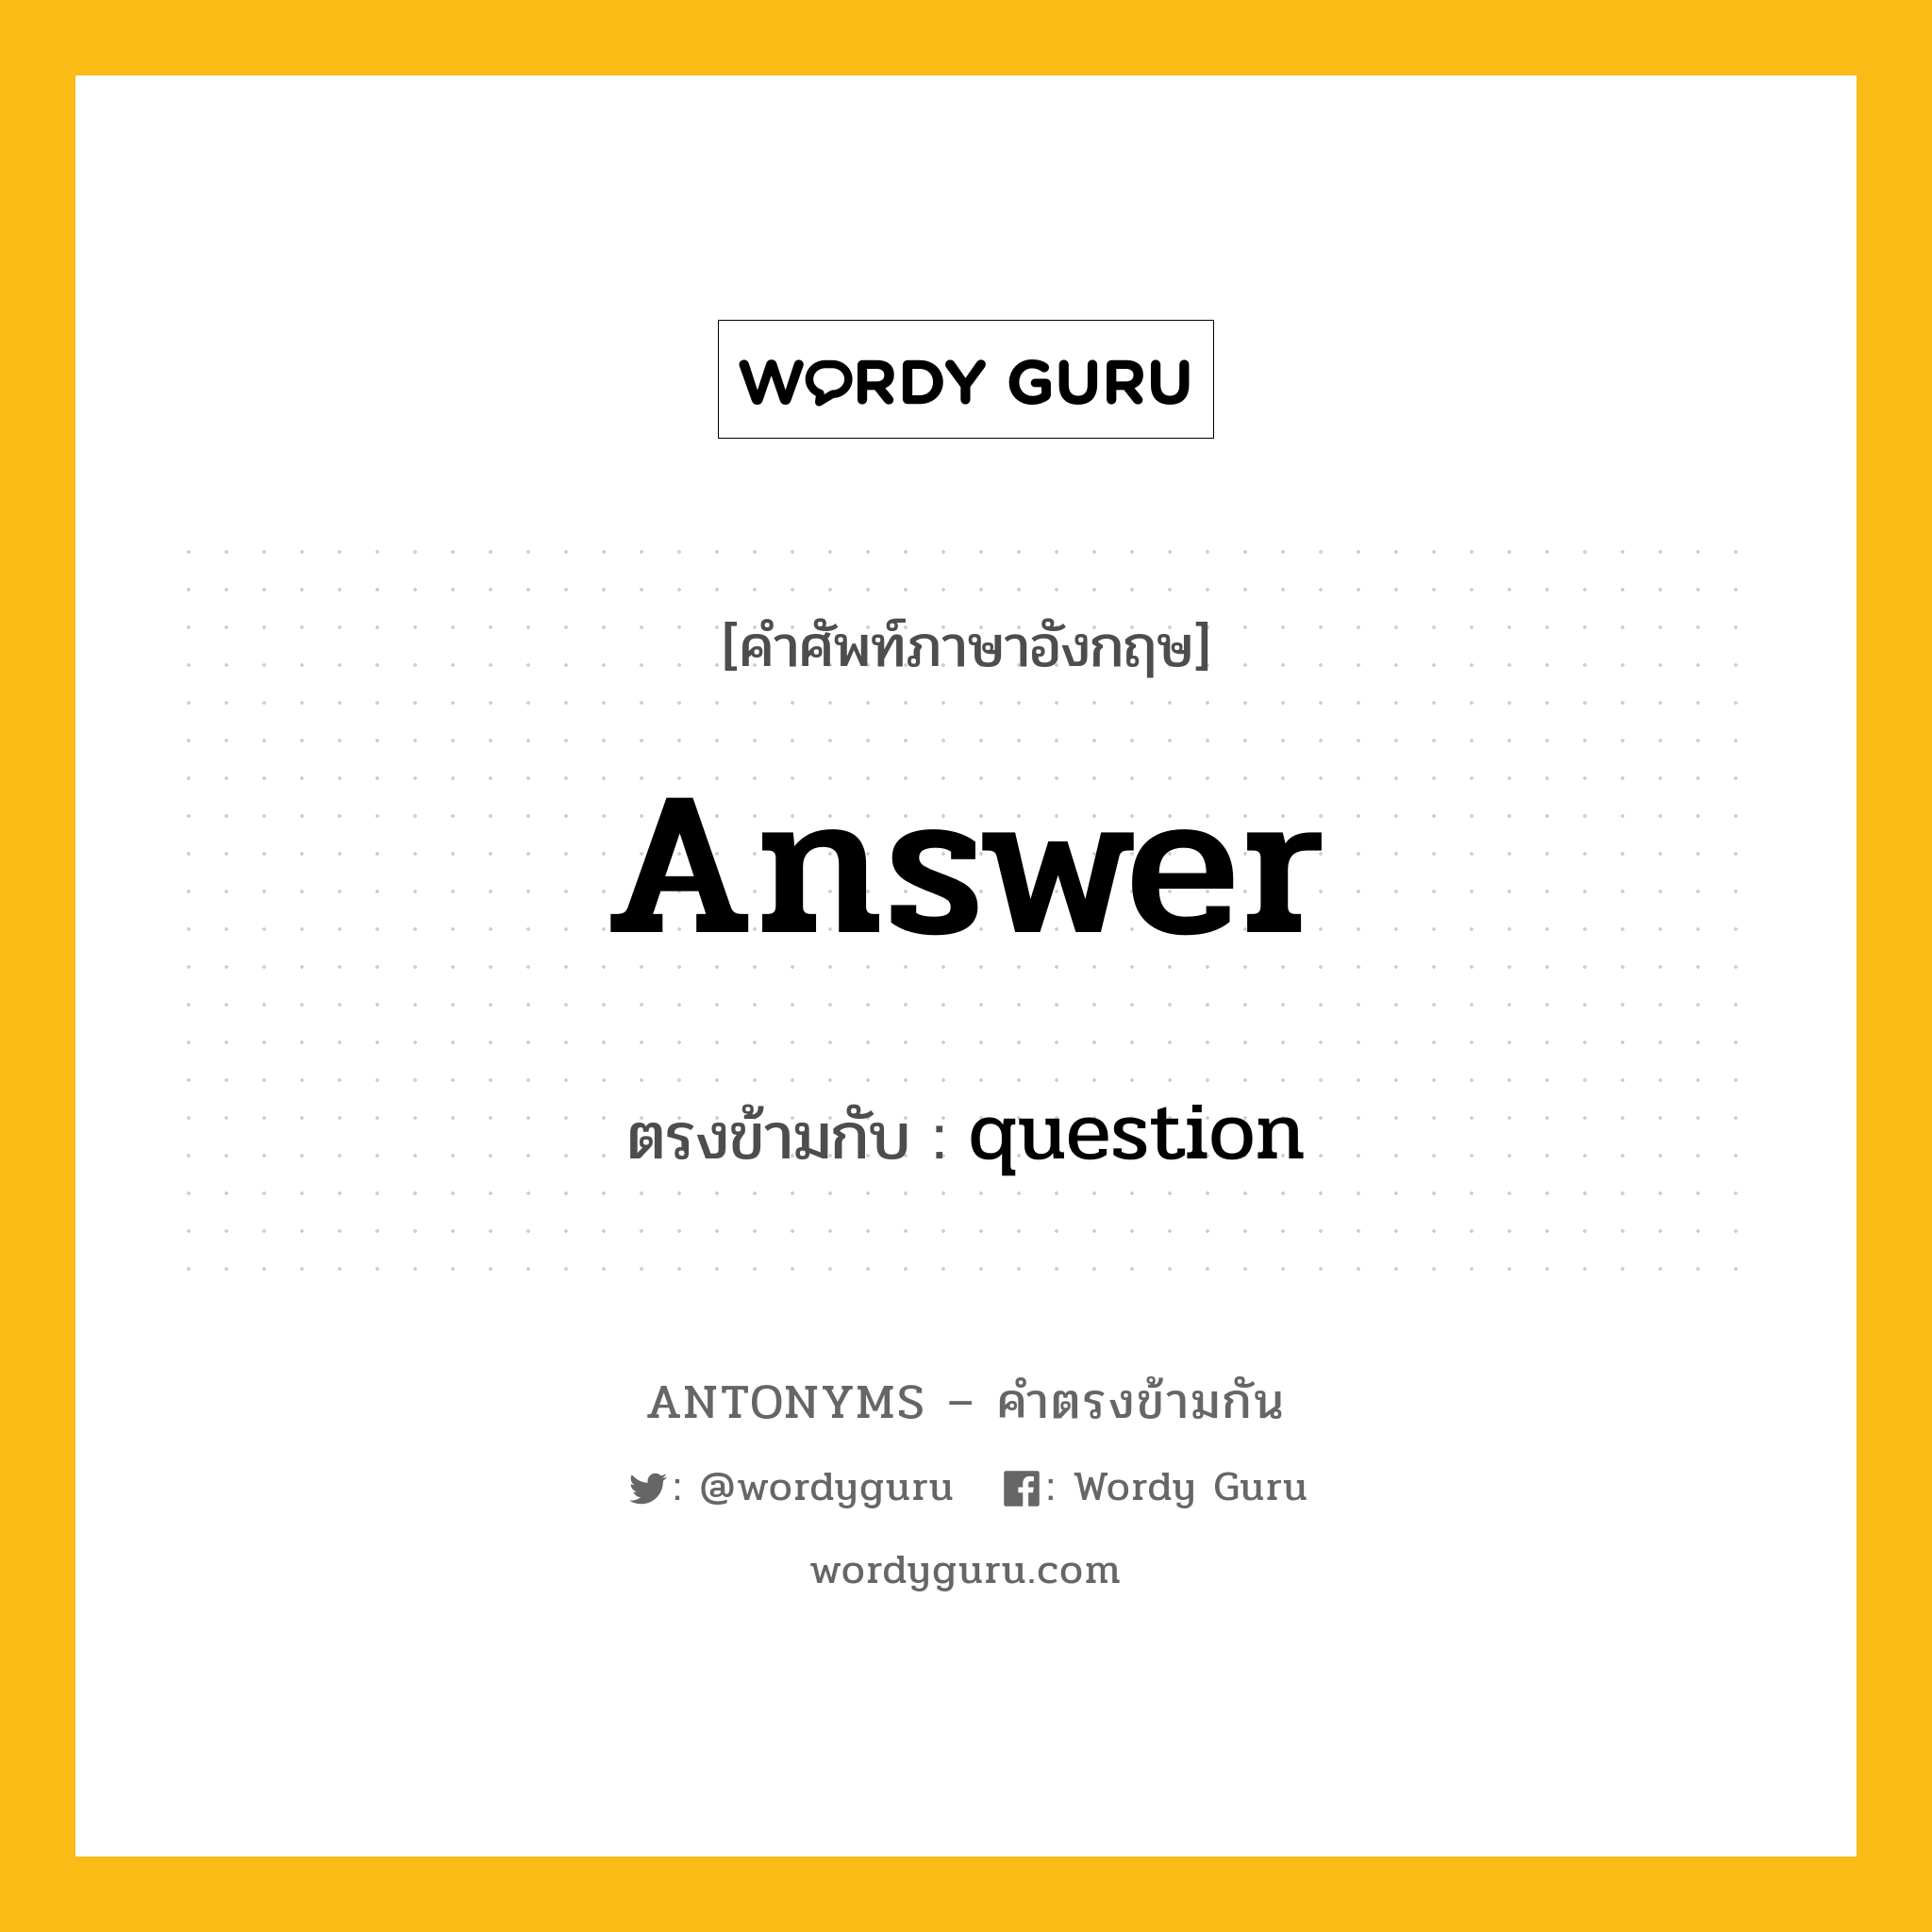 answer เป็นคำตรงข้ามกับคำไหนบ้าง?, คำศัพท์ภาษาอังกฤษ answer ตรงข้ามกับ question หมวด question